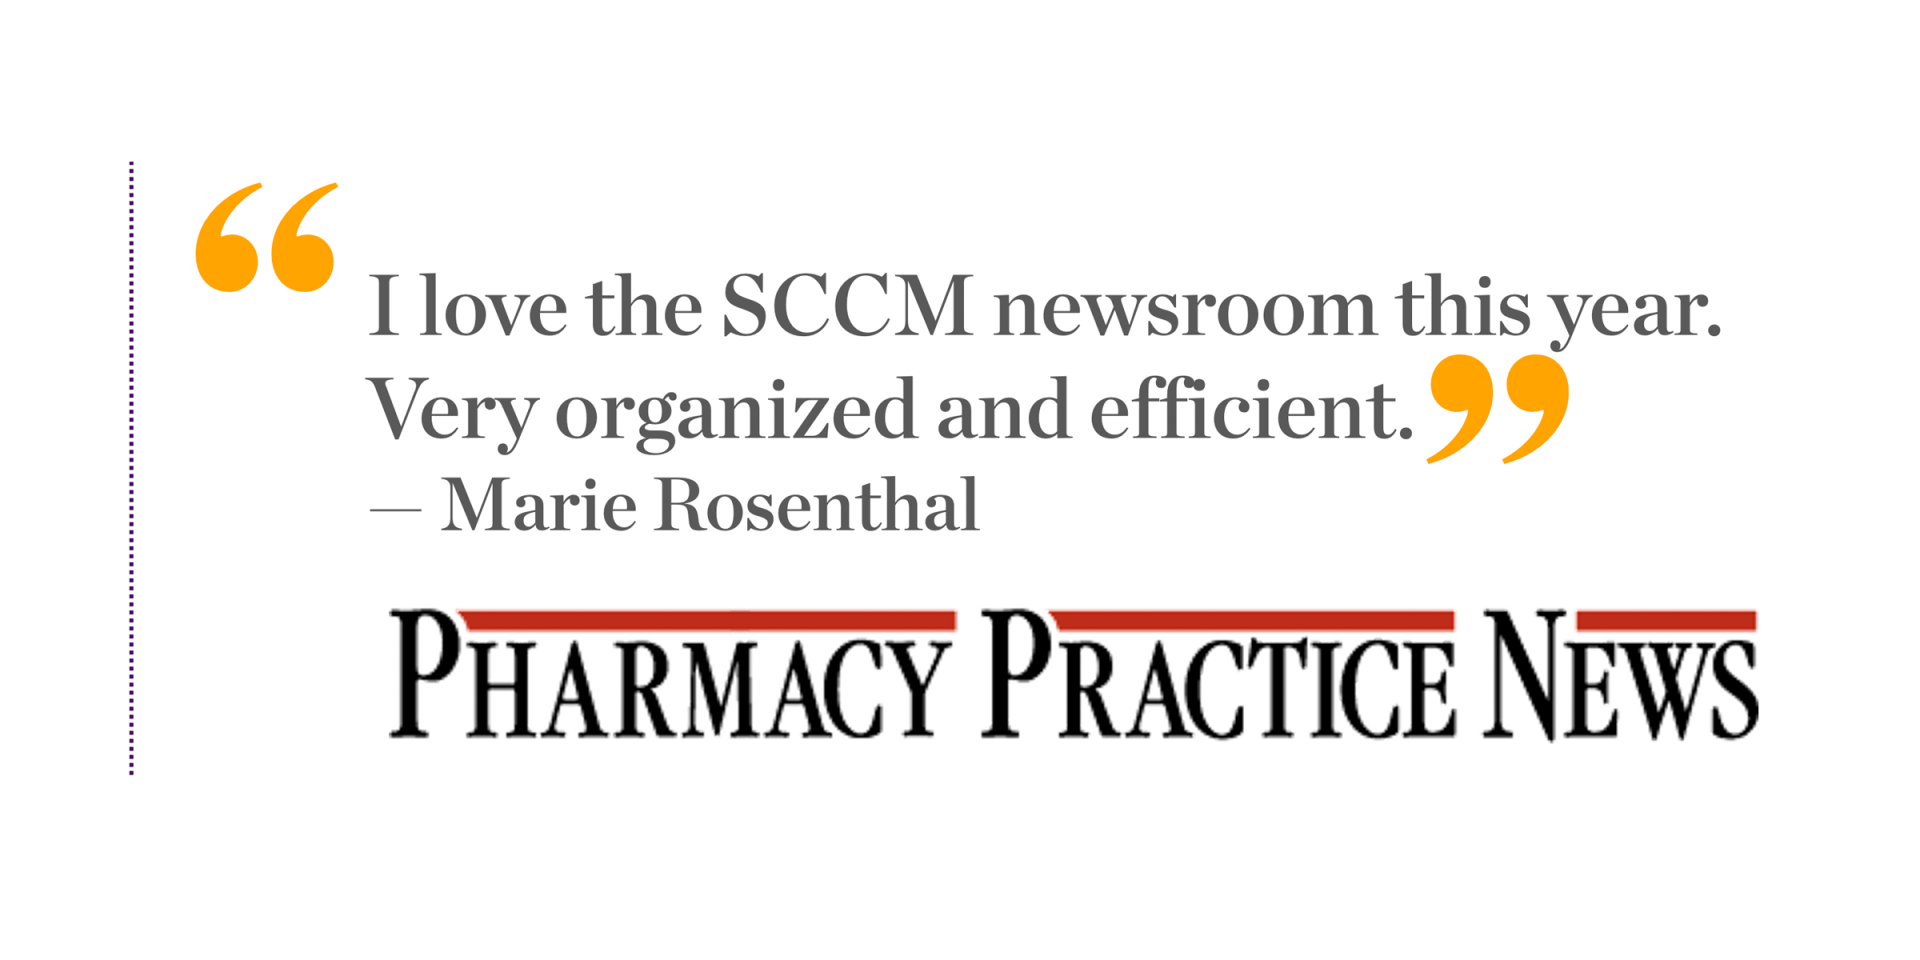 SCCM Pharmacy Practice News Qoute